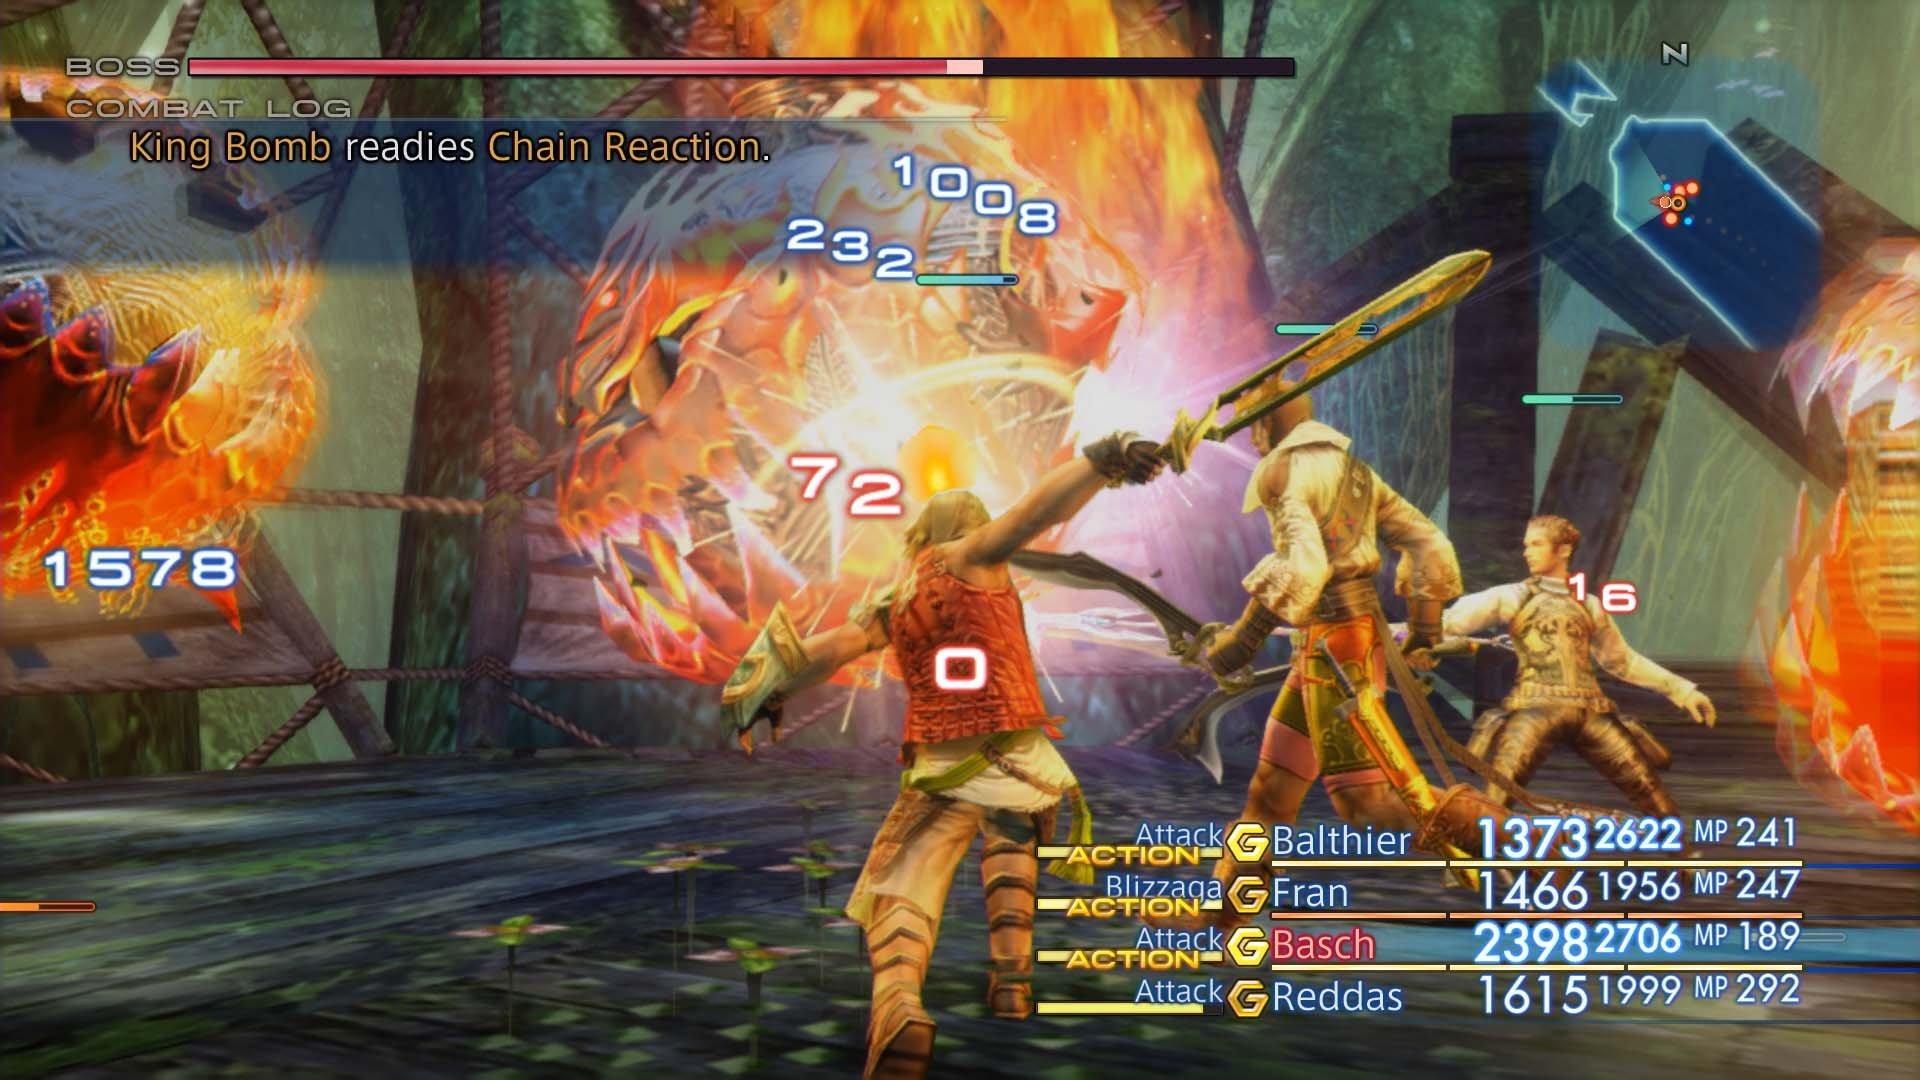 Final Fantasy XII: The Zodiac Age - PlayStation 4, PlayStation 4